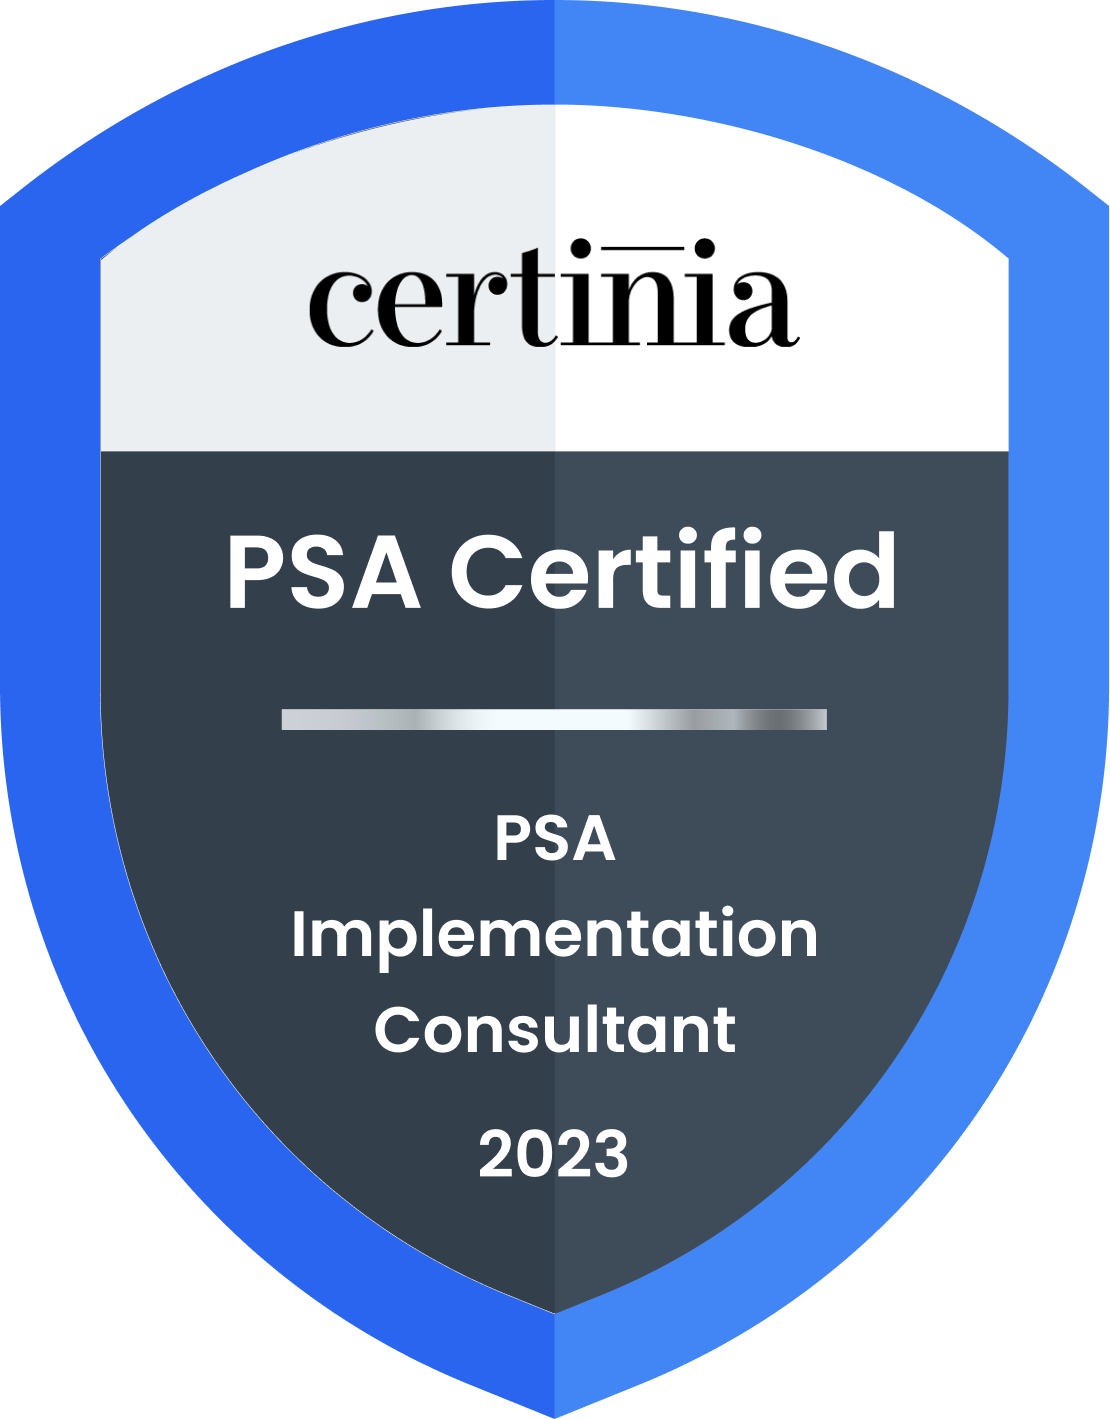 Certinia certification for PSA Implementation Consultant 2023 Badge